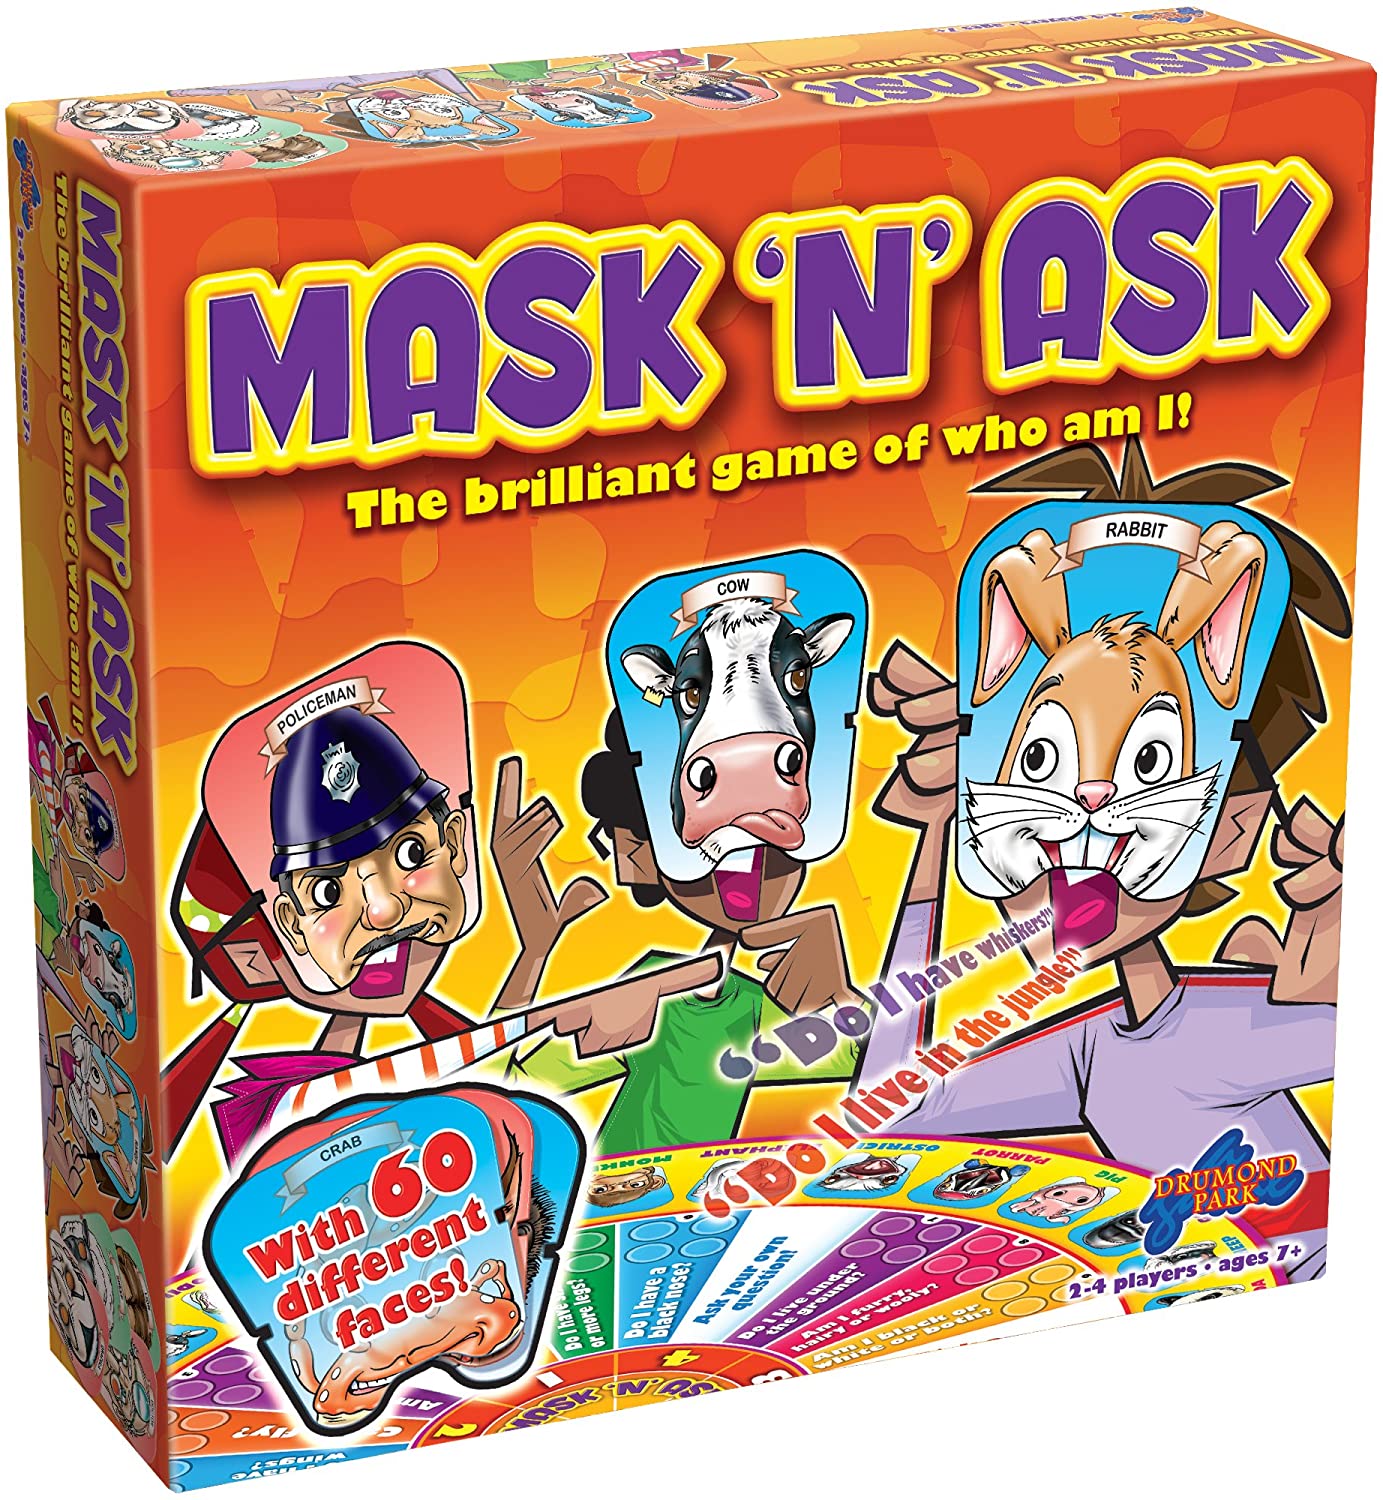 Mask N Ask